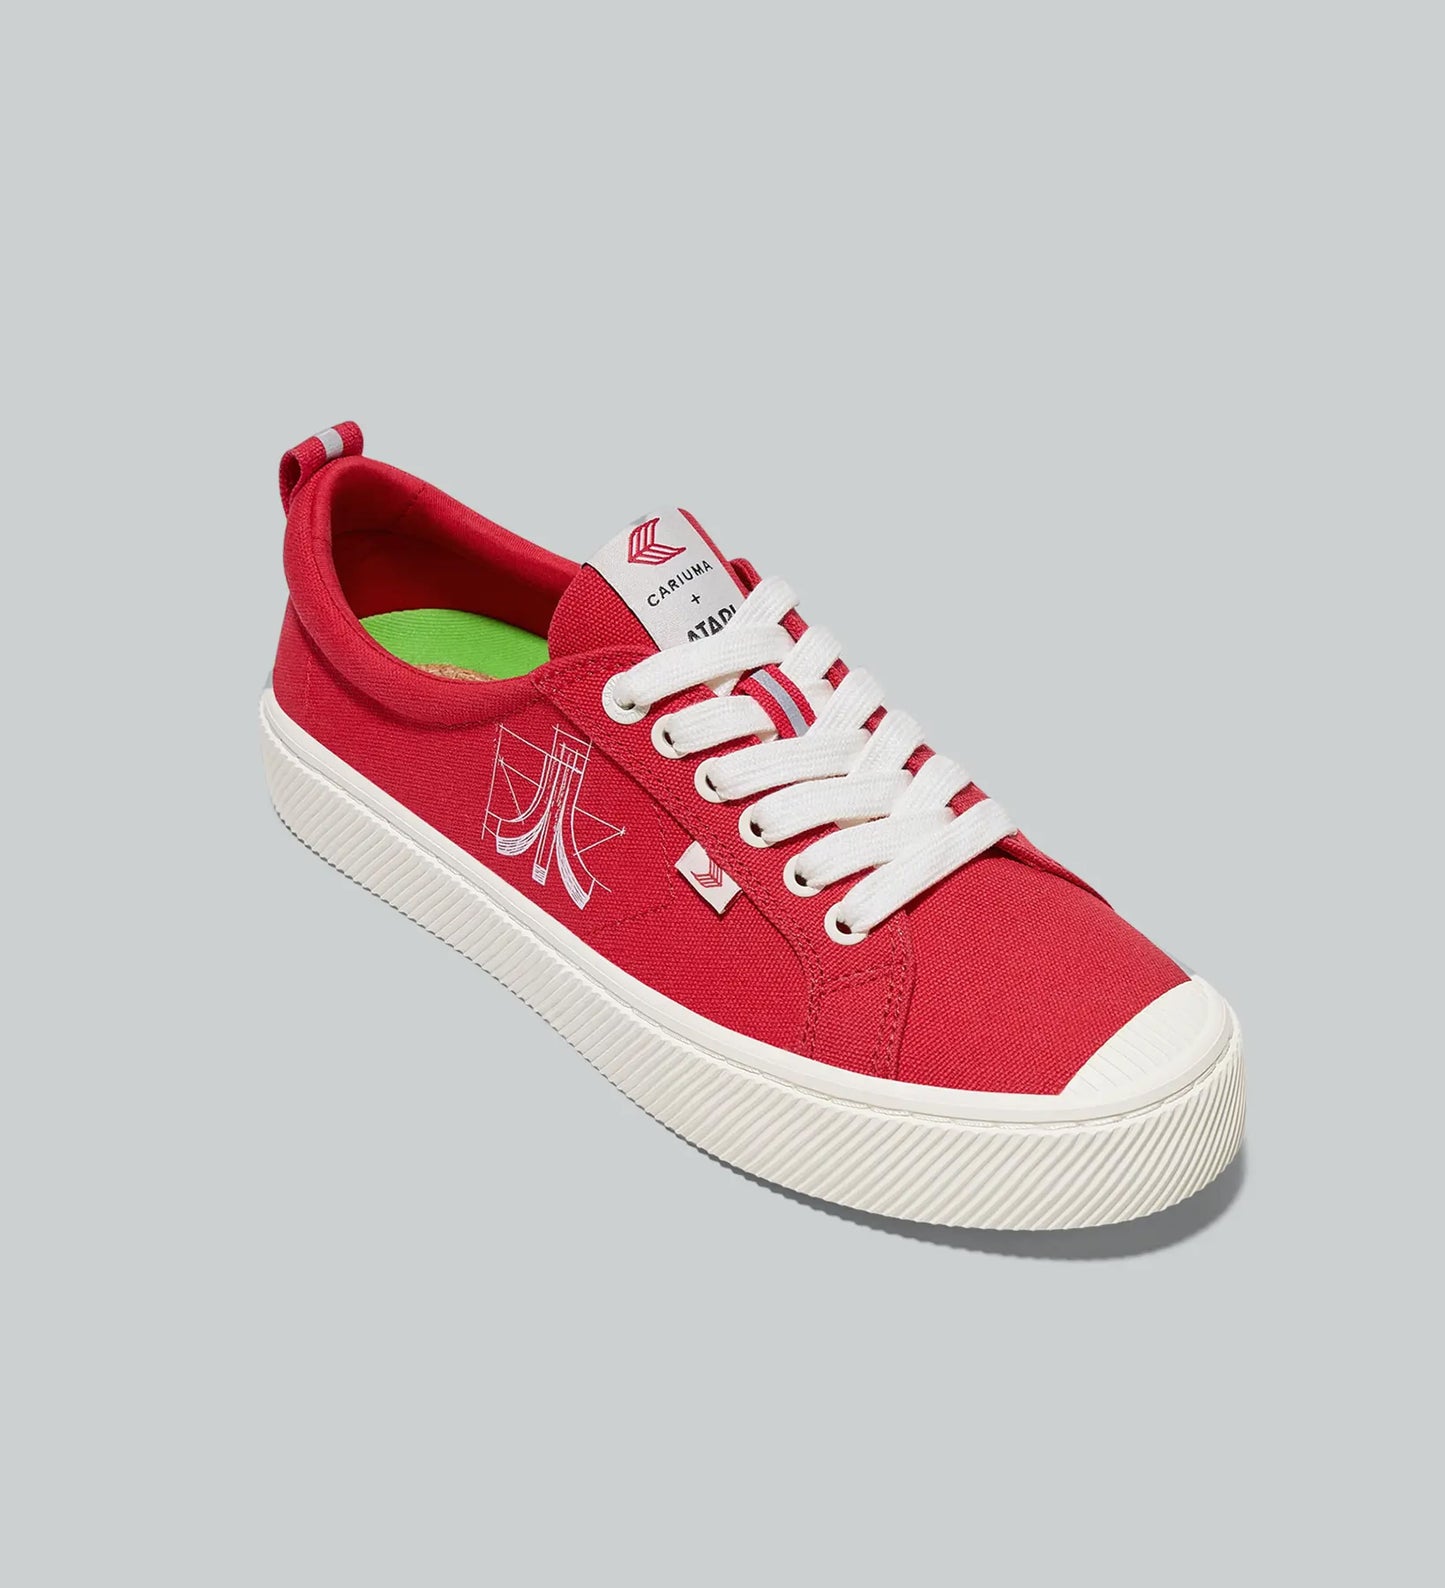 Cariuma x Atari OCA Red Canvas Sneaker - Women